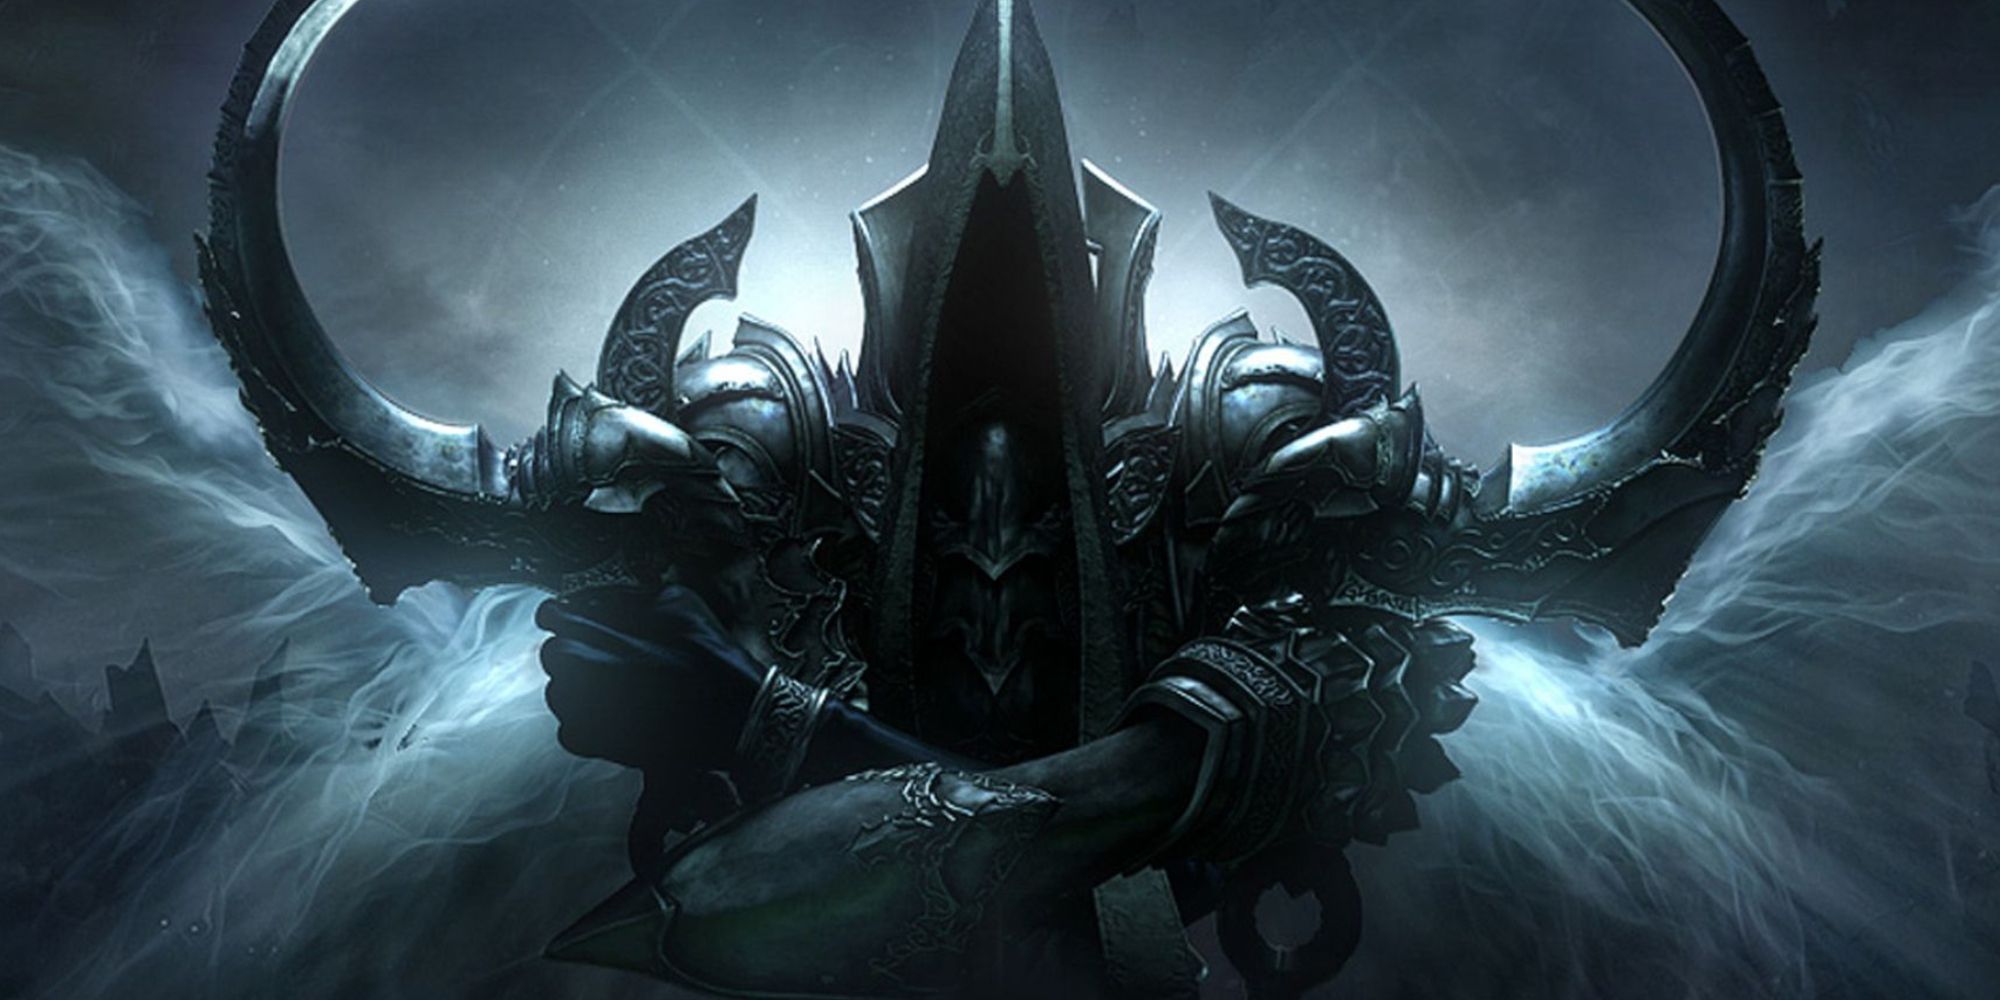 Diablo 3 reaper like character holding hand scythes